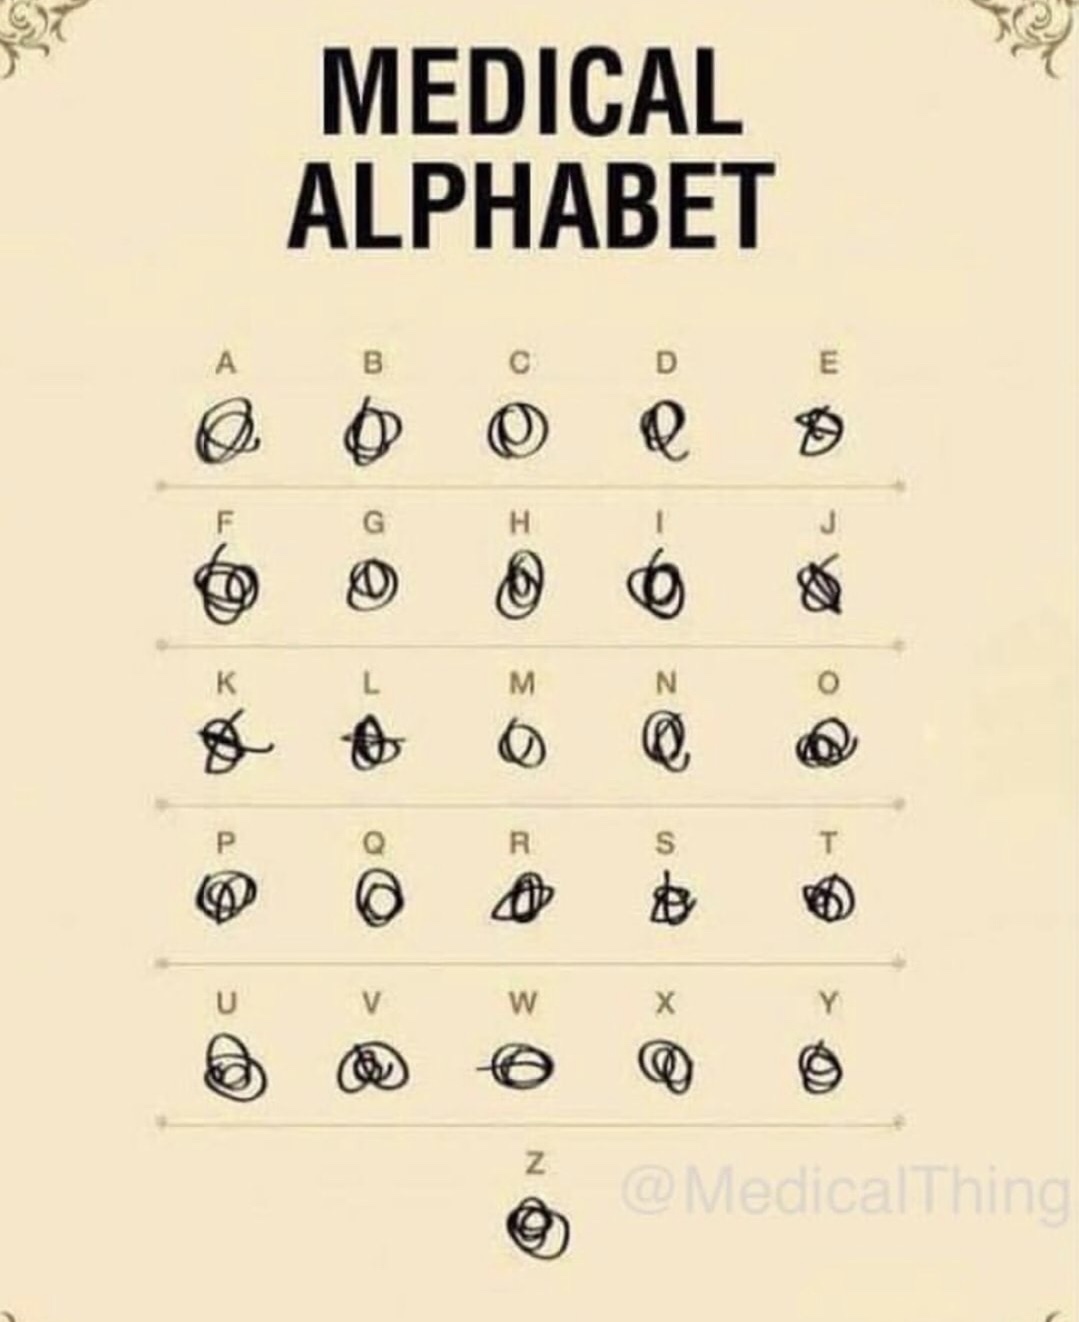 medical alphabet meme - Medical Alphabet A B C D E